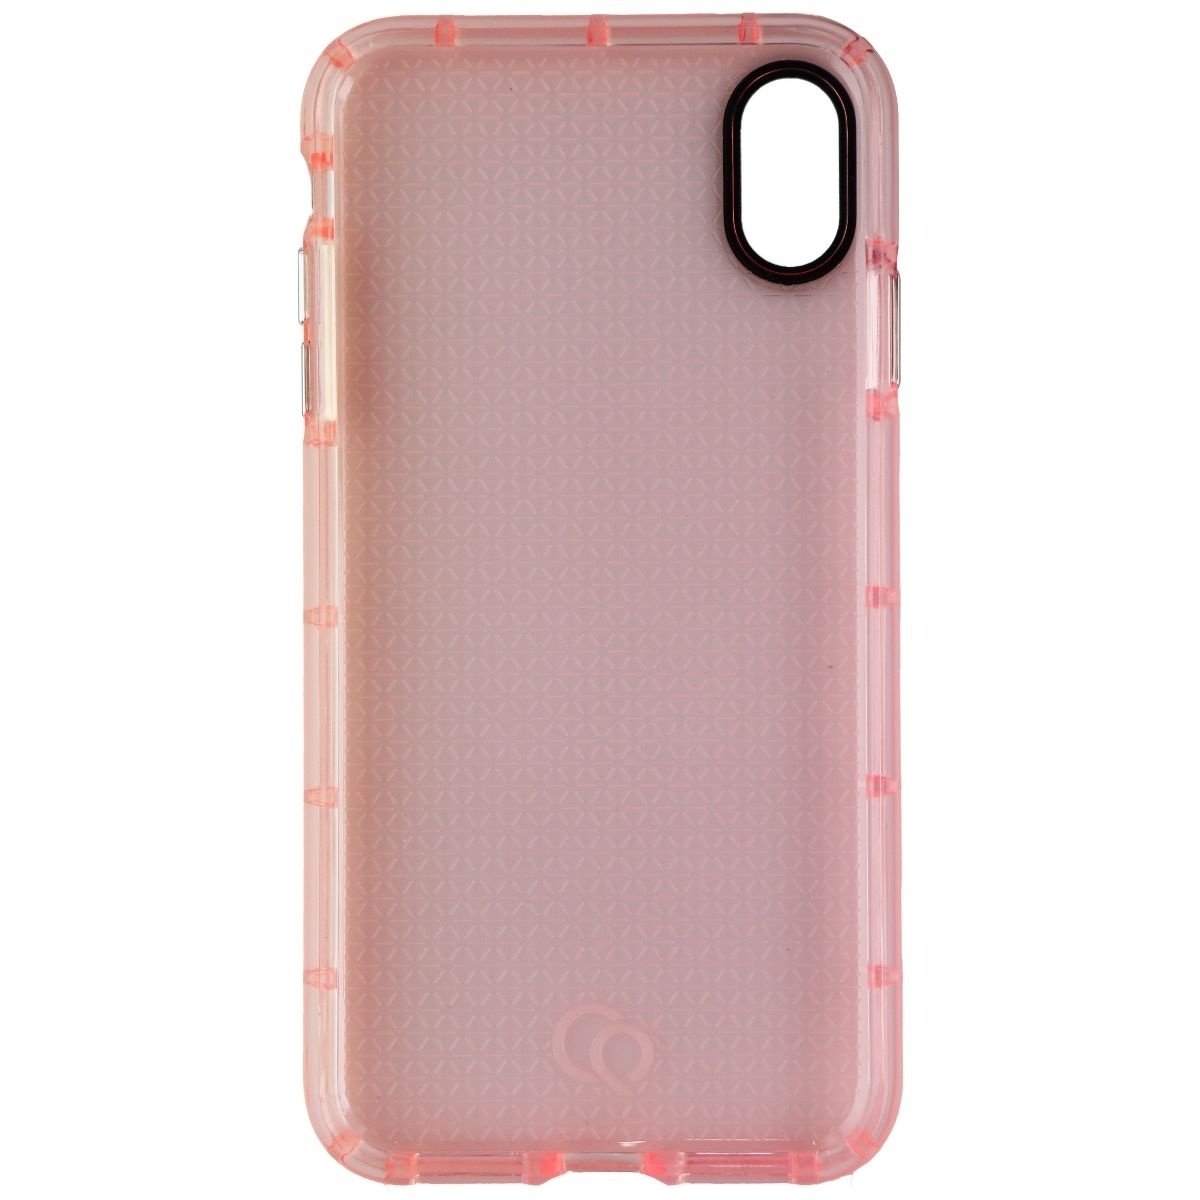 Nimbus9 Phantom 2 Series Gel Case For IPhone Xs Max - Flamingo Pink